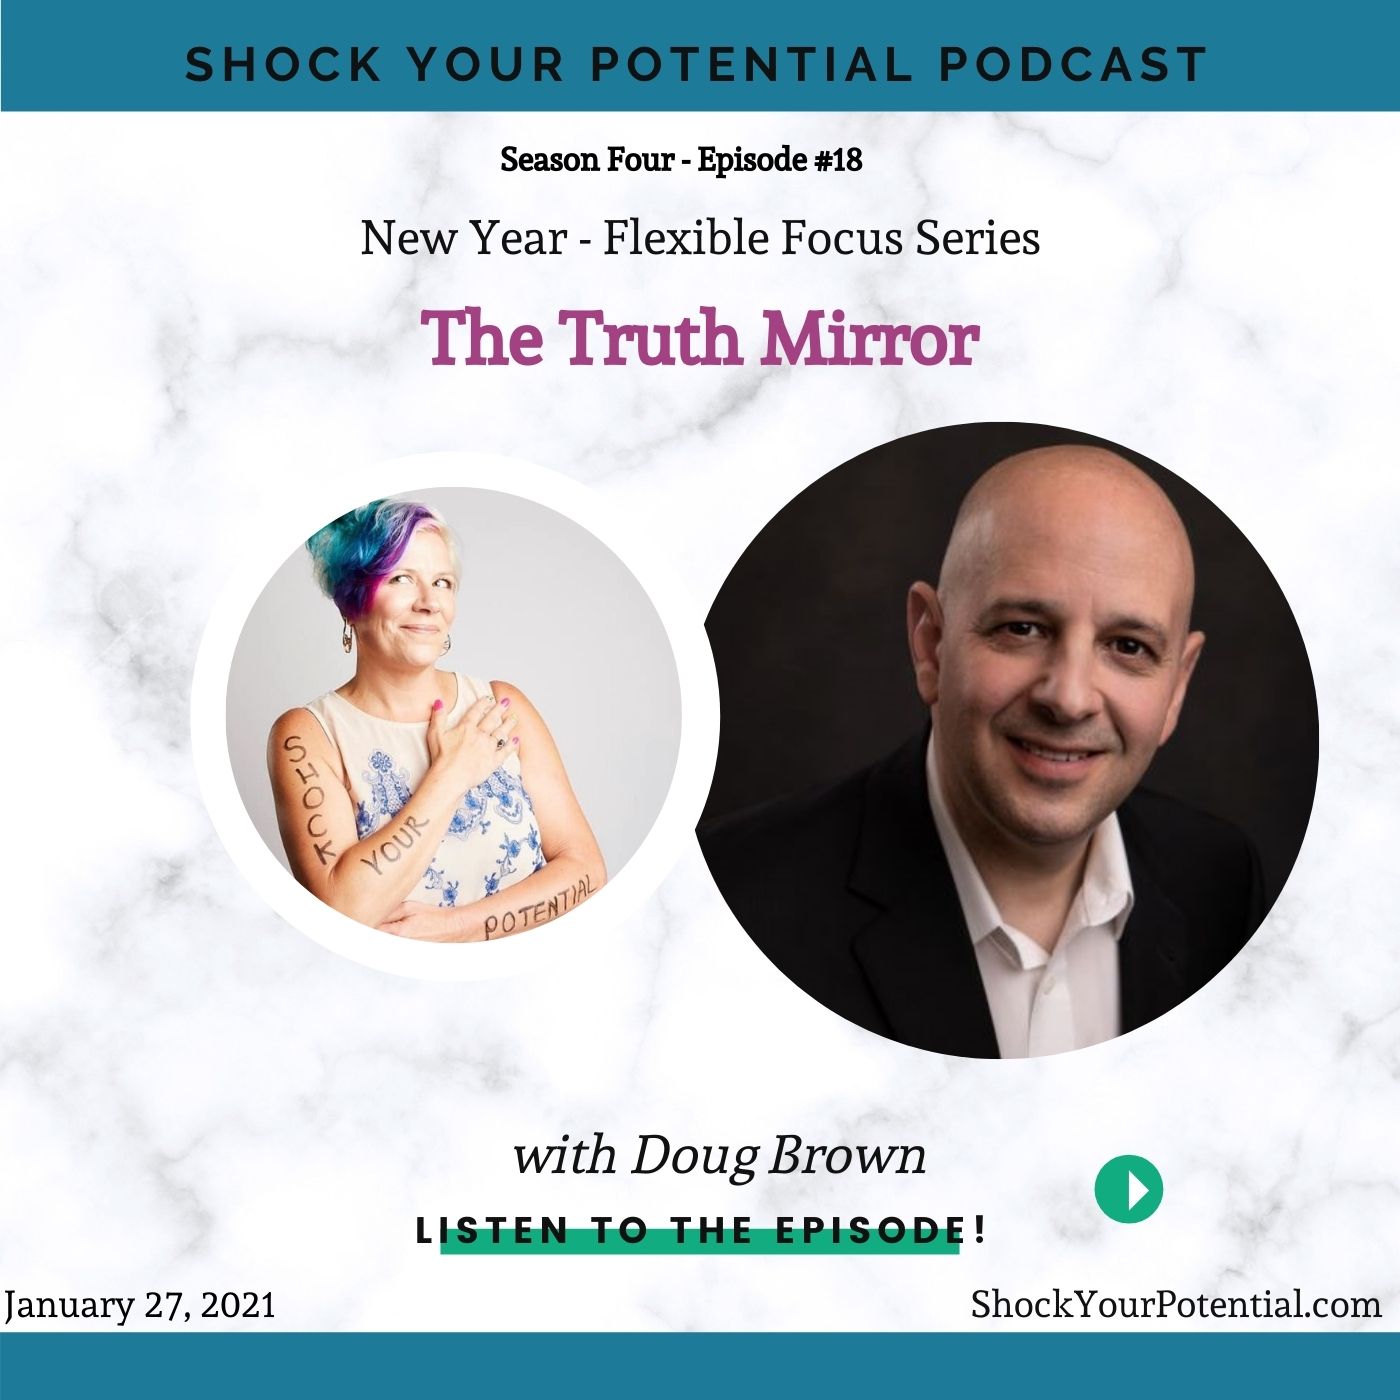 The Truth Mirror – Doug Brown